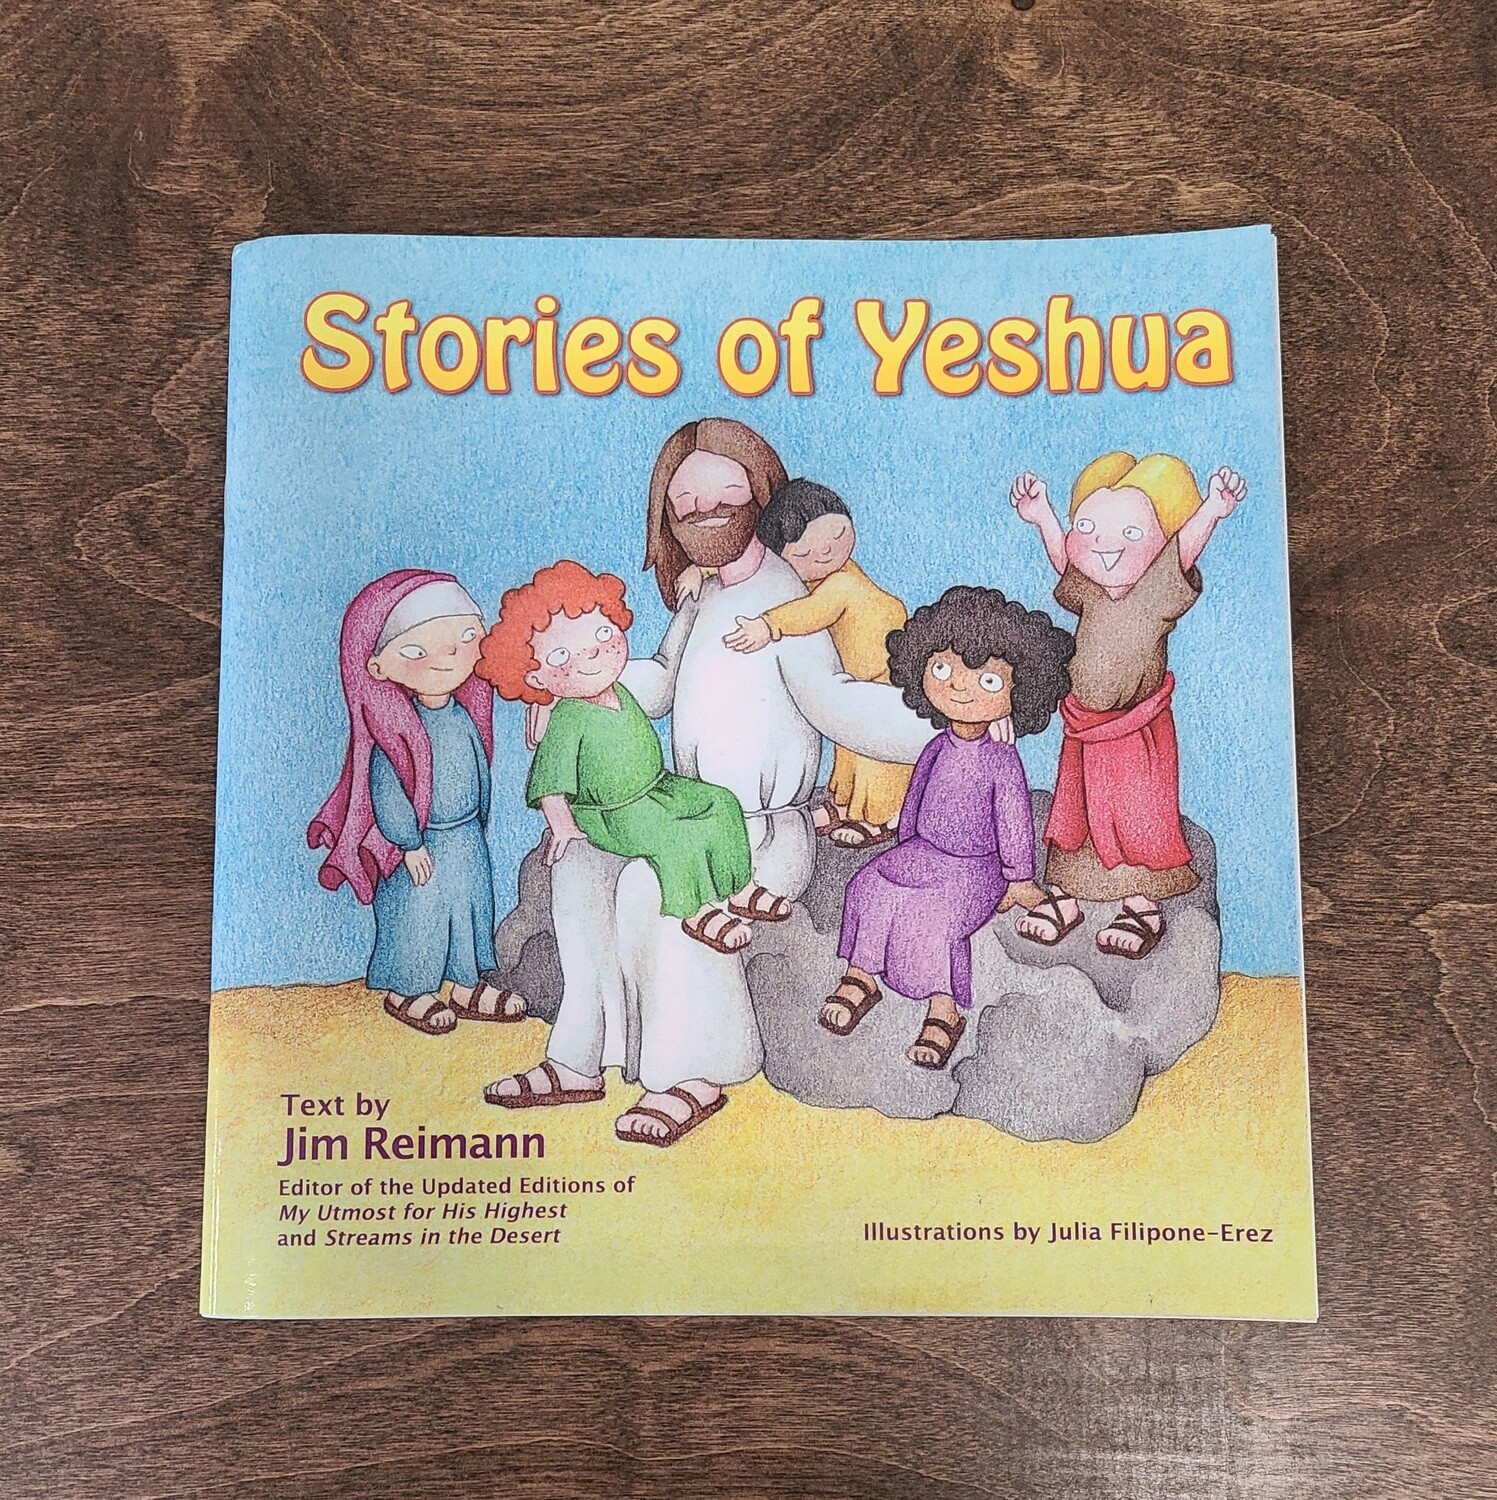 Stories of Yeshua by Jim Reimann and Julia Filipone-Erez